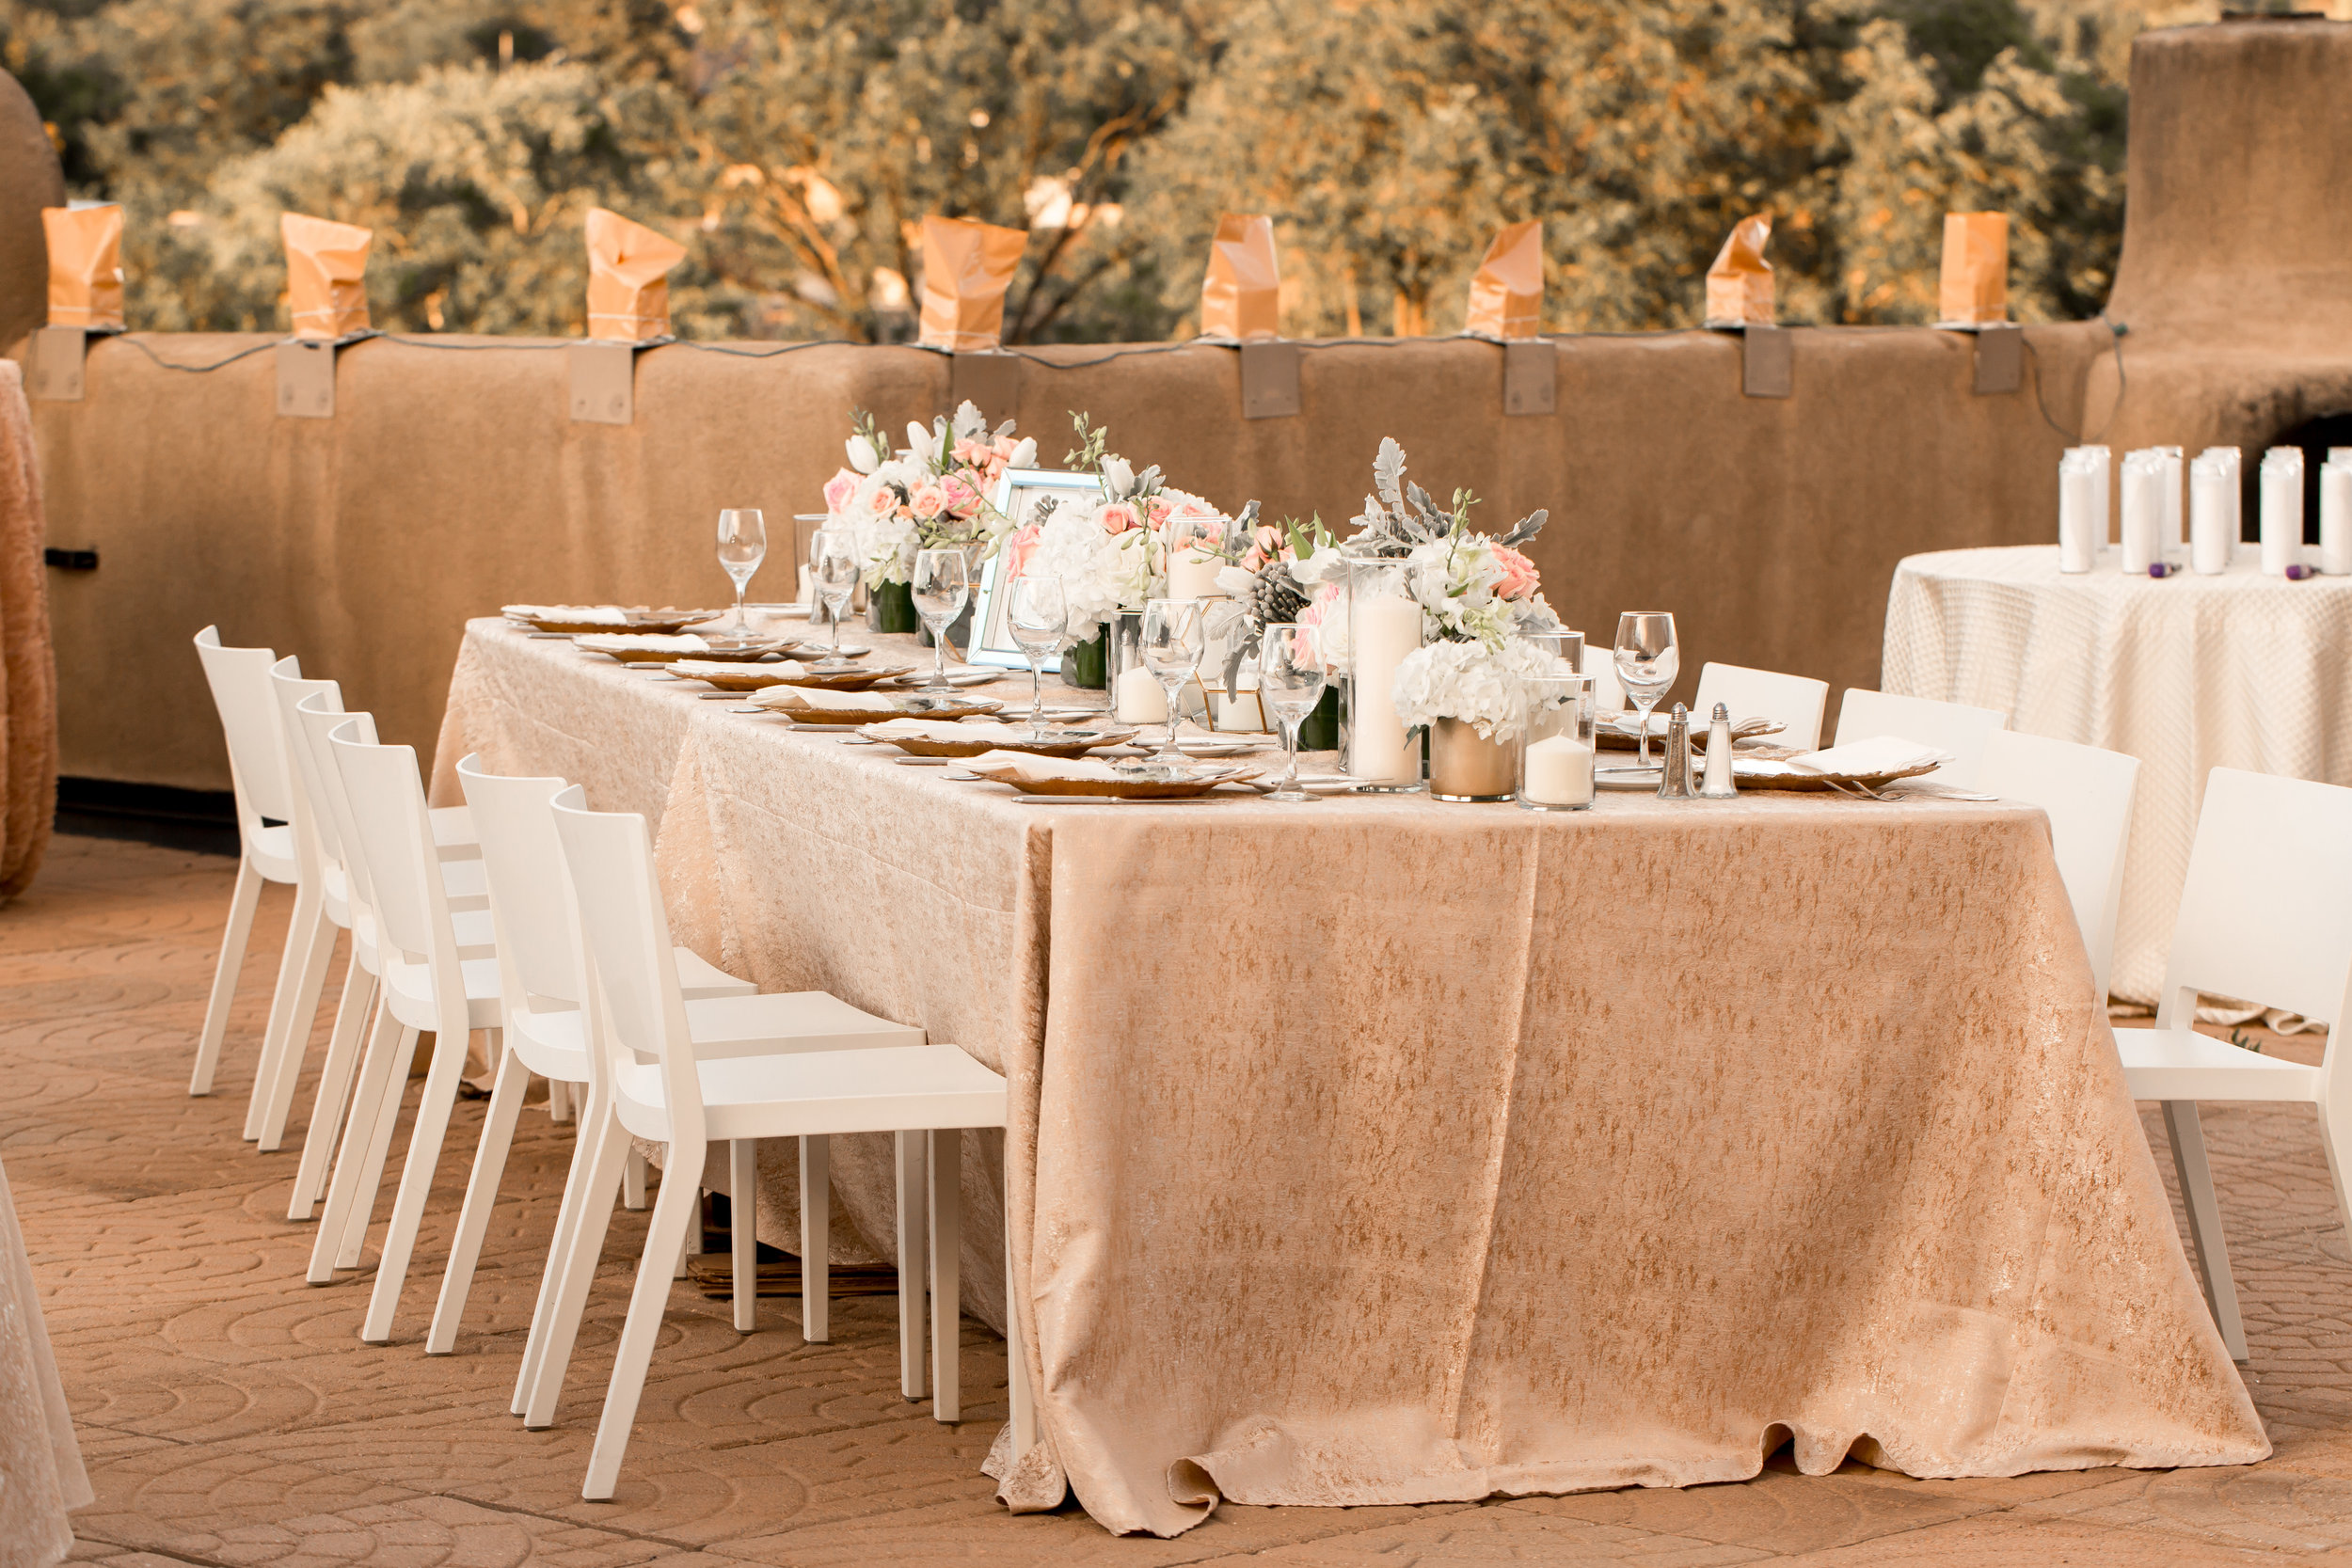  daytoremember.net | Talitha Tarro Photography | El Dorado Hotel &amp; Spa | A Day To Remember Santa Fe New Mexico Luxury Wedding Planning and Design | Luxury Destination Wedding 